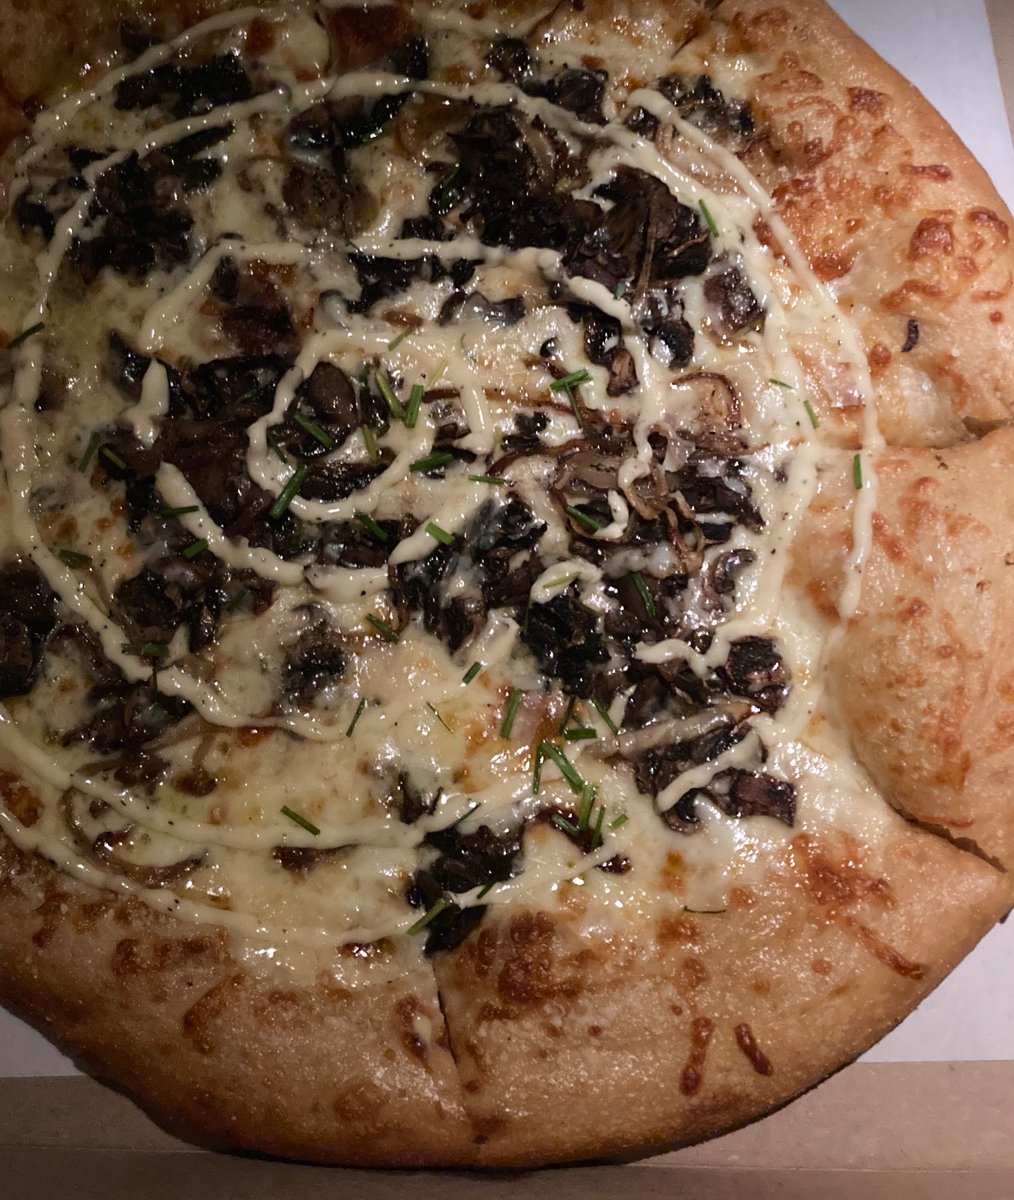 Pizza! Mellow Mushroom’s Holy Shitake - mushrooms & cheeses w garlic aioli swirl. 😋

#pizzaislife